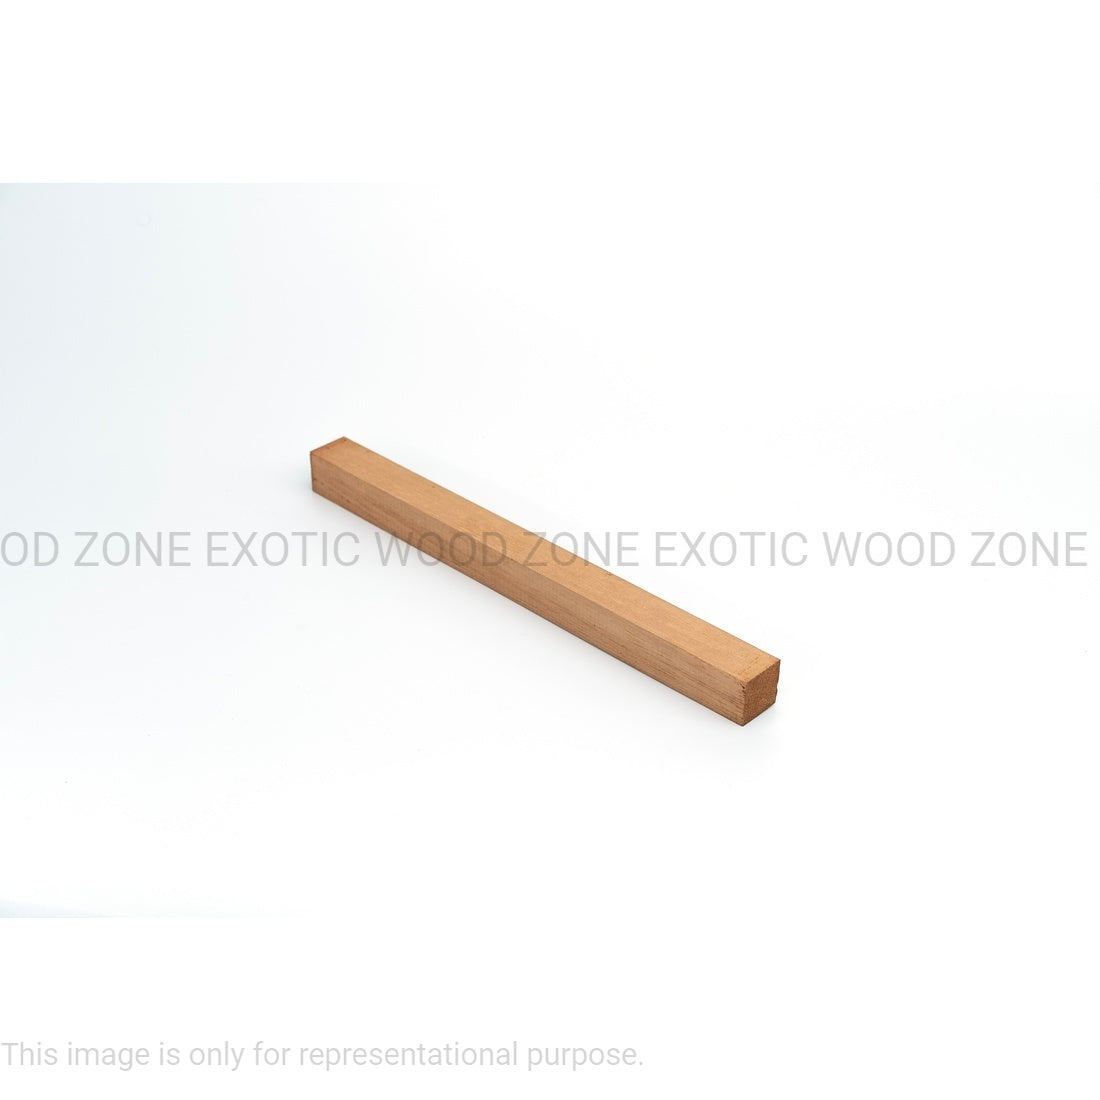 Spanish Cedar Hobbywood Blank 1&quot; x 1 &quot; x 12&quot; inches Exotic Wood Zone